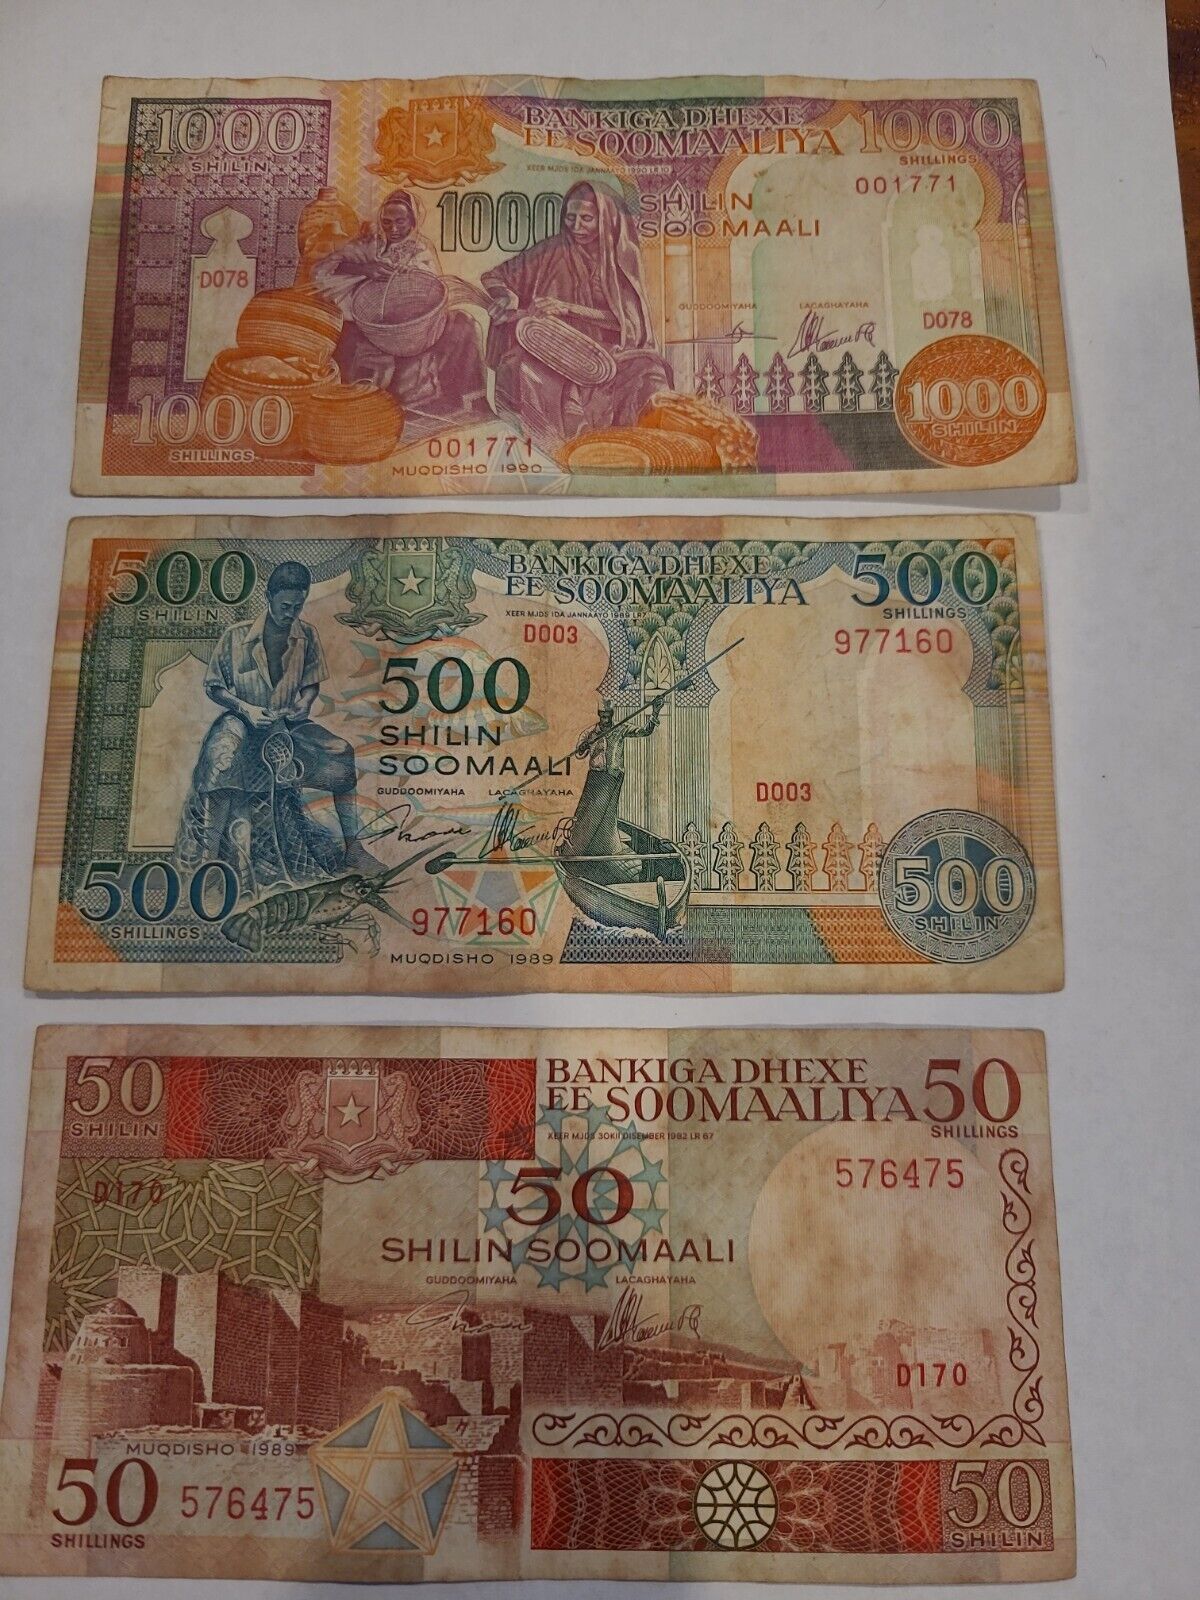 Somalia Banknotes - 1550 Shilin - (1000,500,50) Great Price And Free Shipping!!!